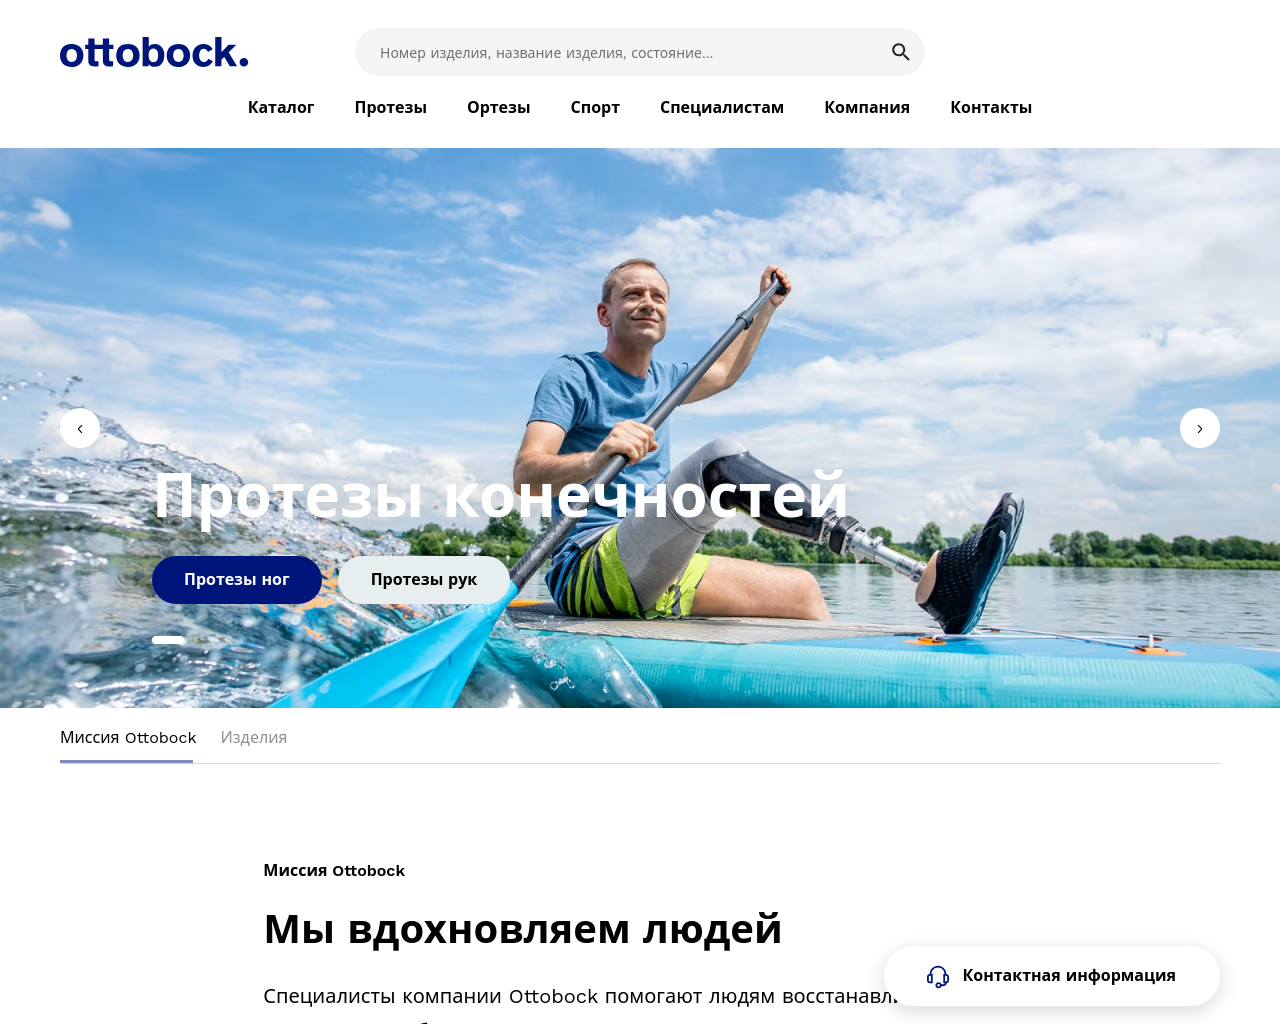 ottobock.ru